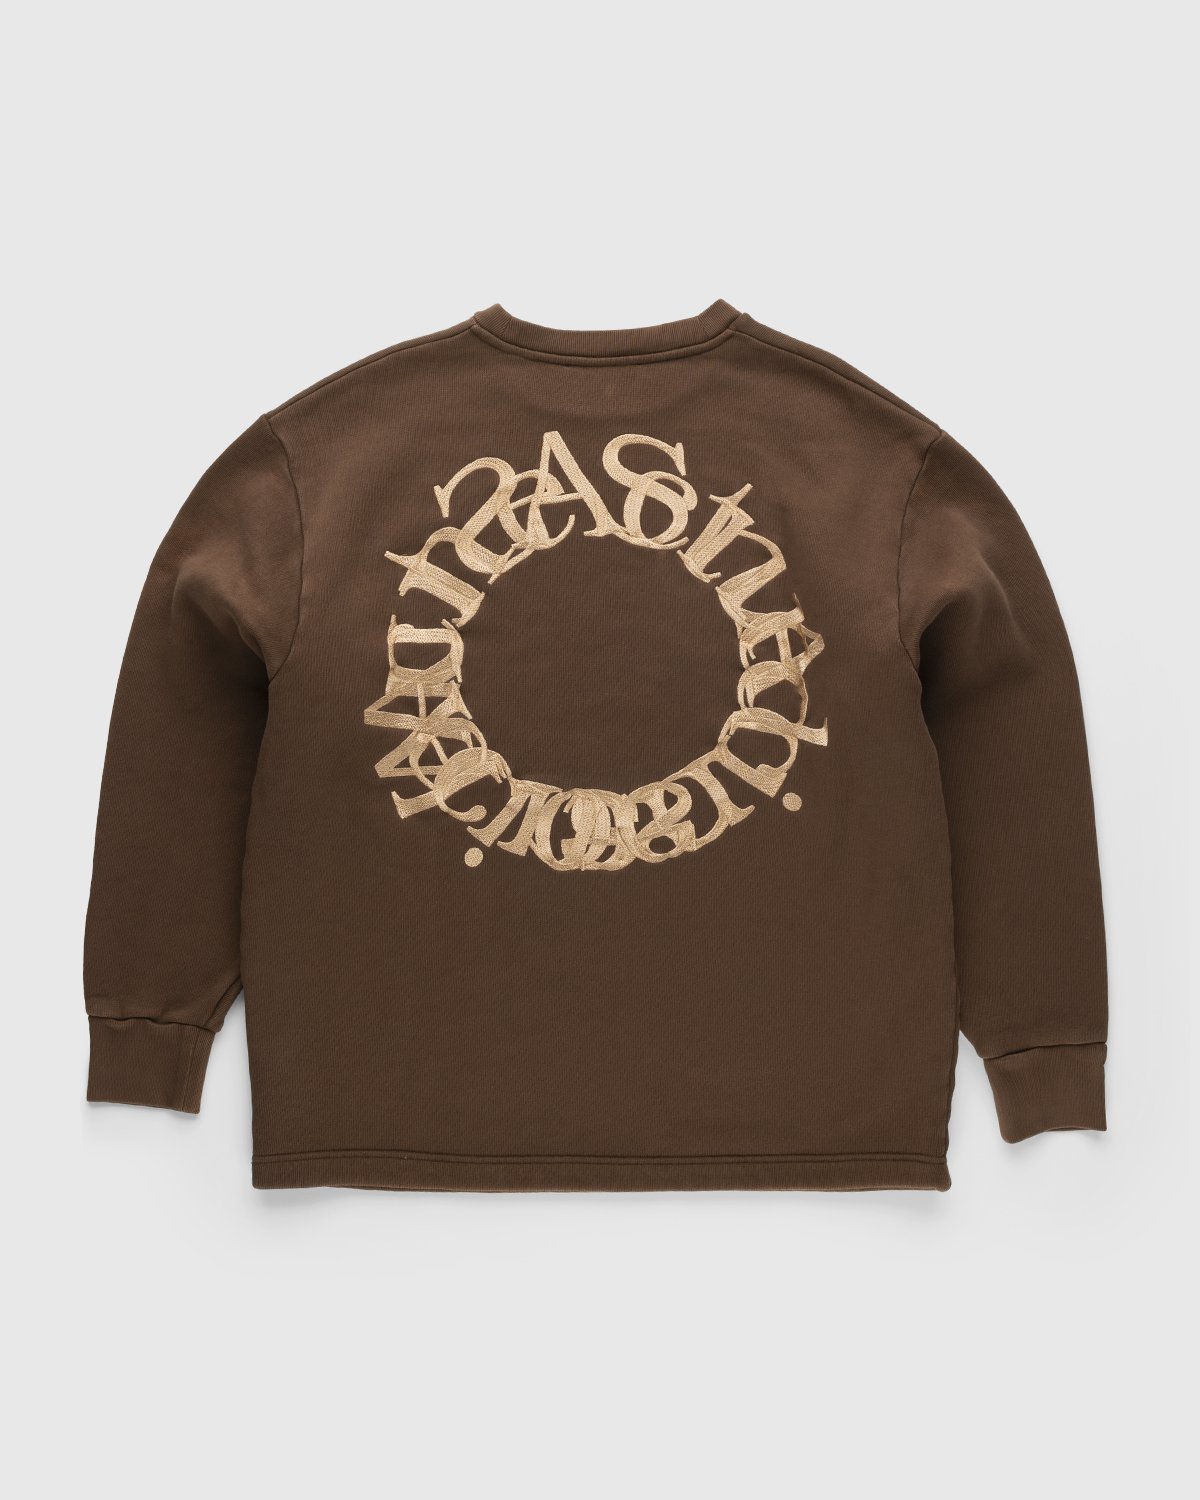 Acne Studios - Logo Sweatshirt Chocolate Brown - Clothing - Brown - Image 1